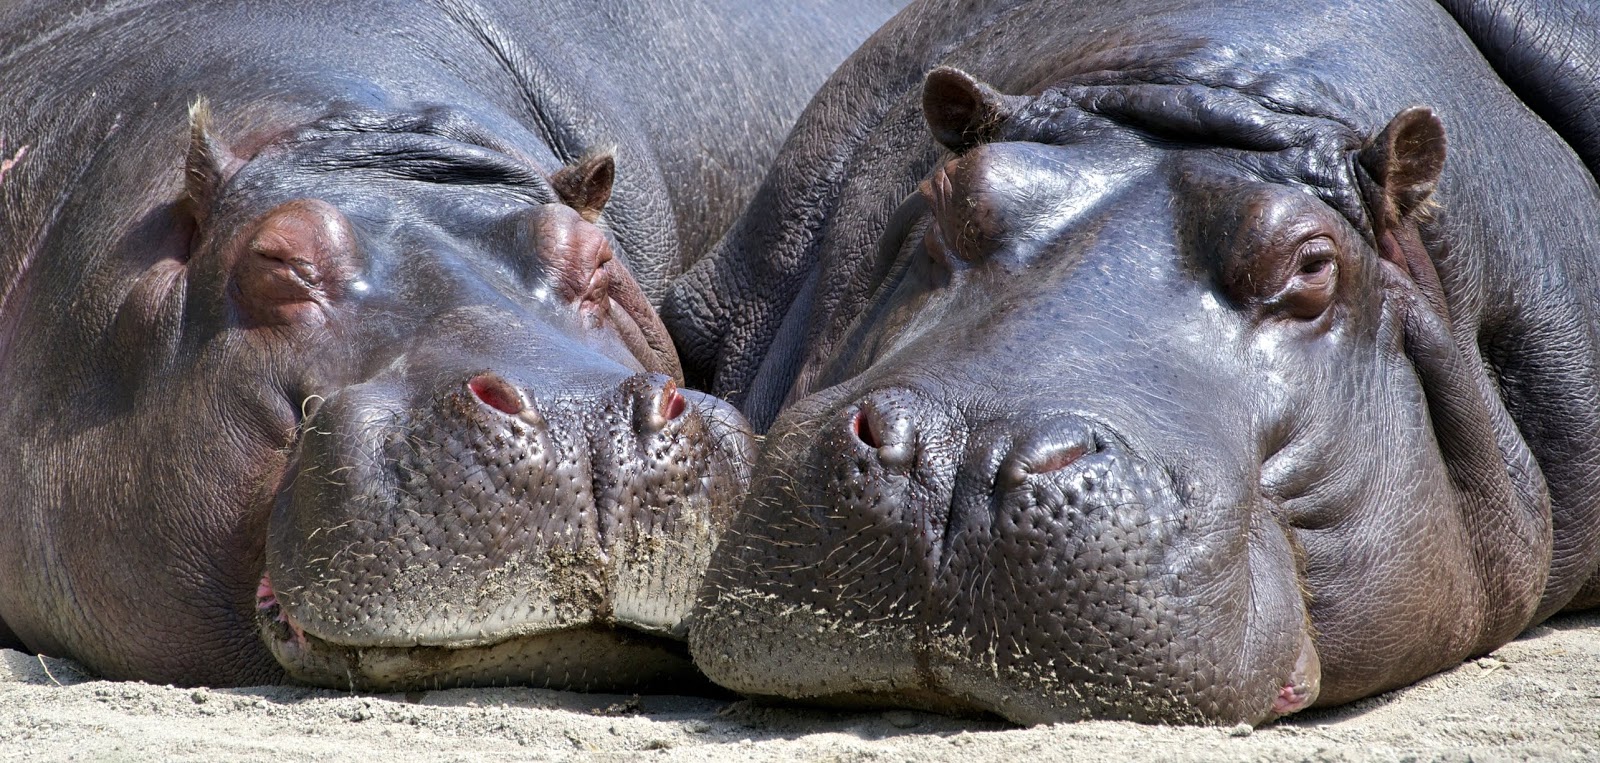 montessori activities at home. Hippos.